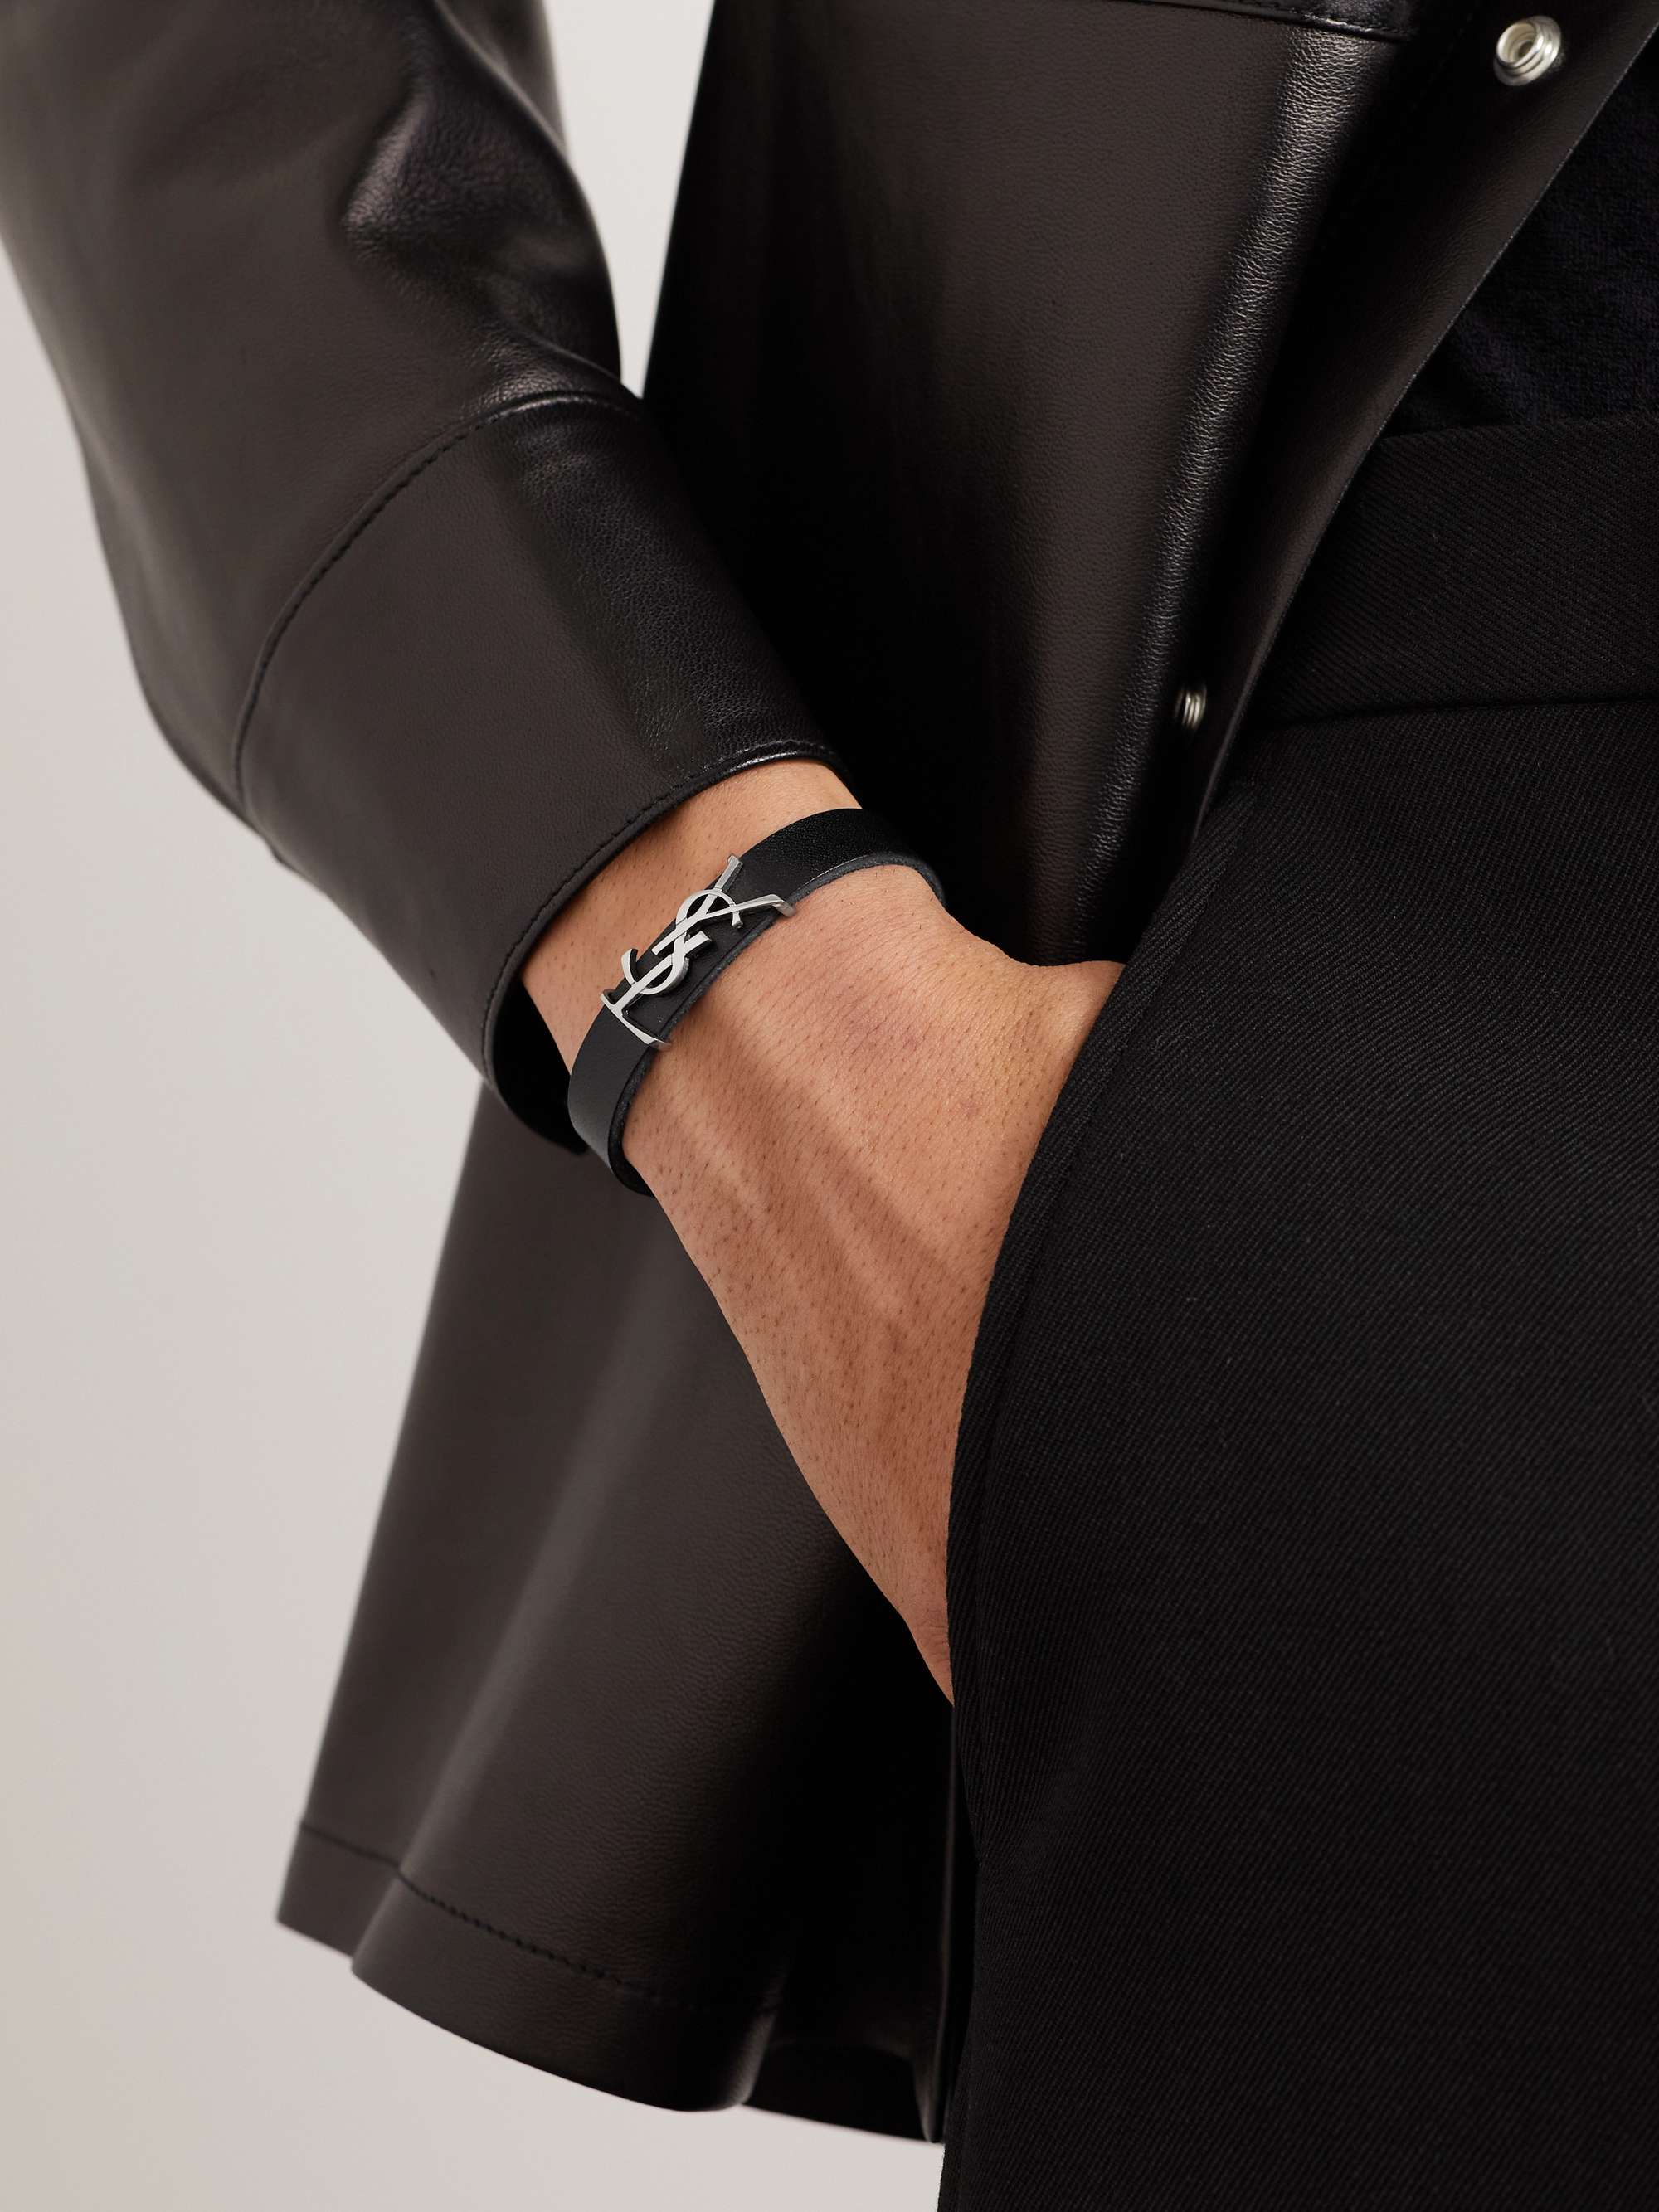 SAINT LAURENT Opyum Leather and Silver-Tone Bracelet for Men | MR PORTER